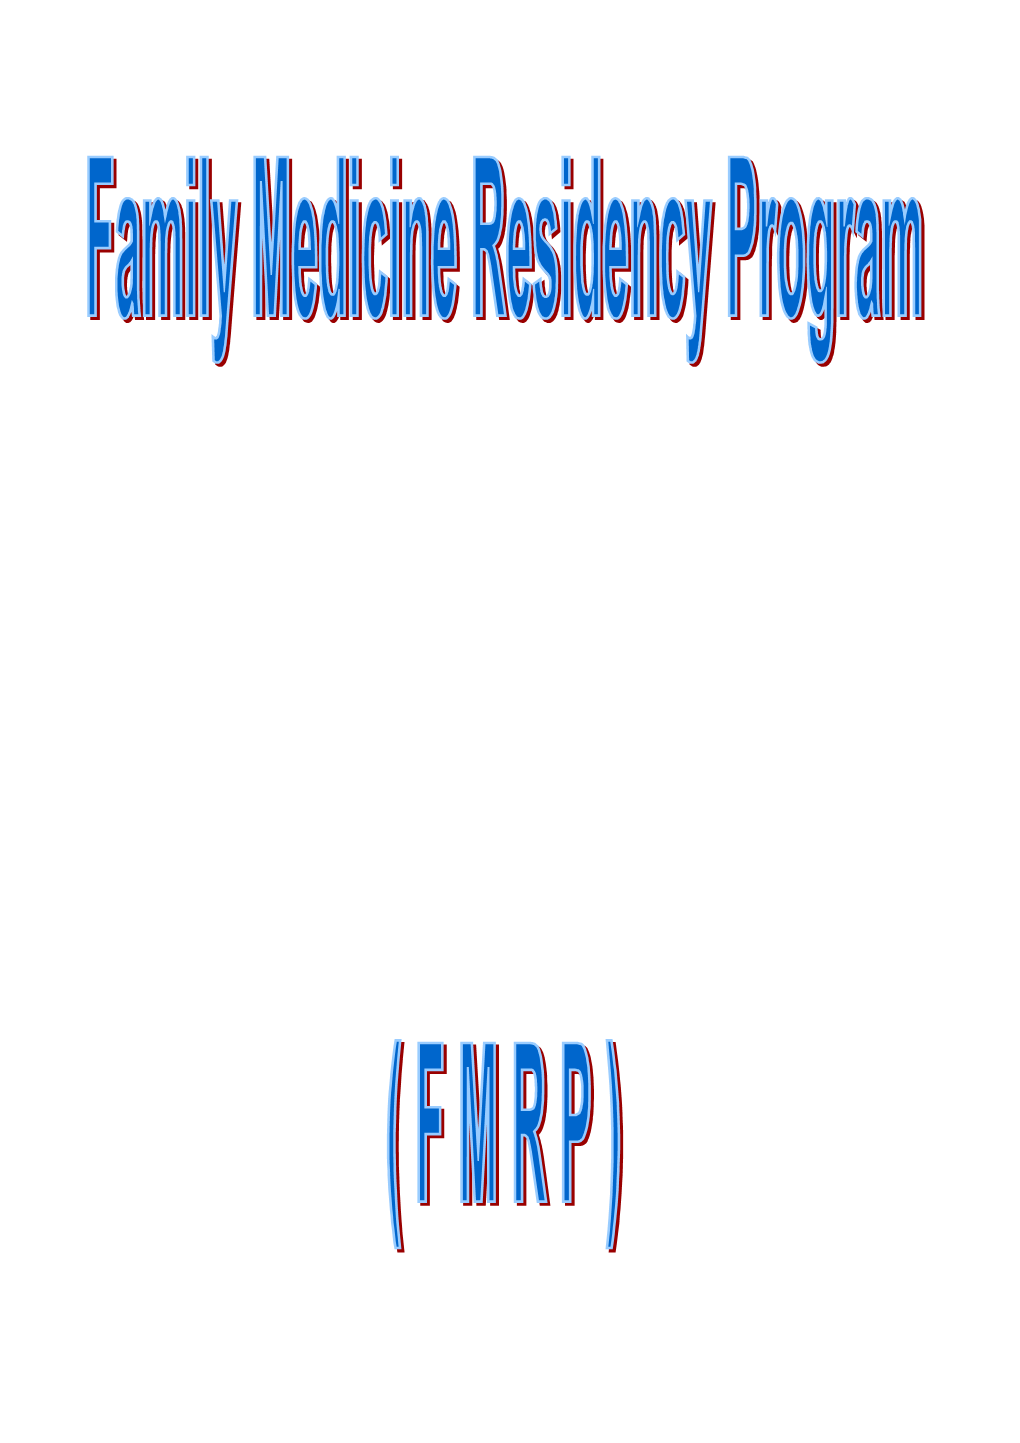 Objectives of Family Medicine Center Rotation